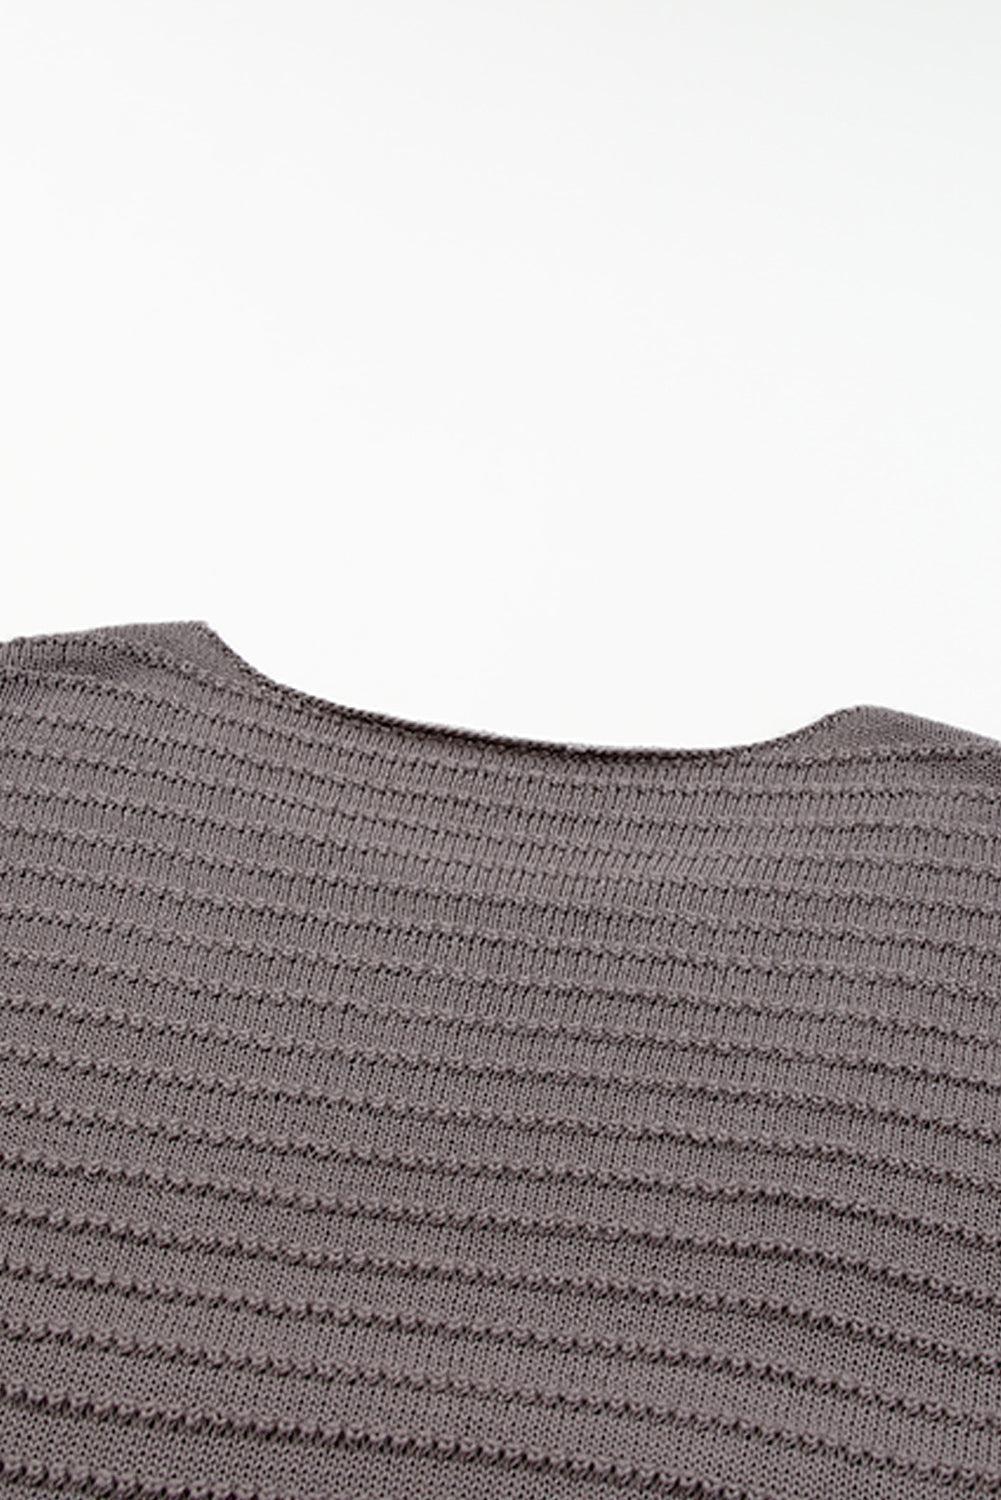 Green Textured Knit Round Neck Dolman Sleeve Sweater